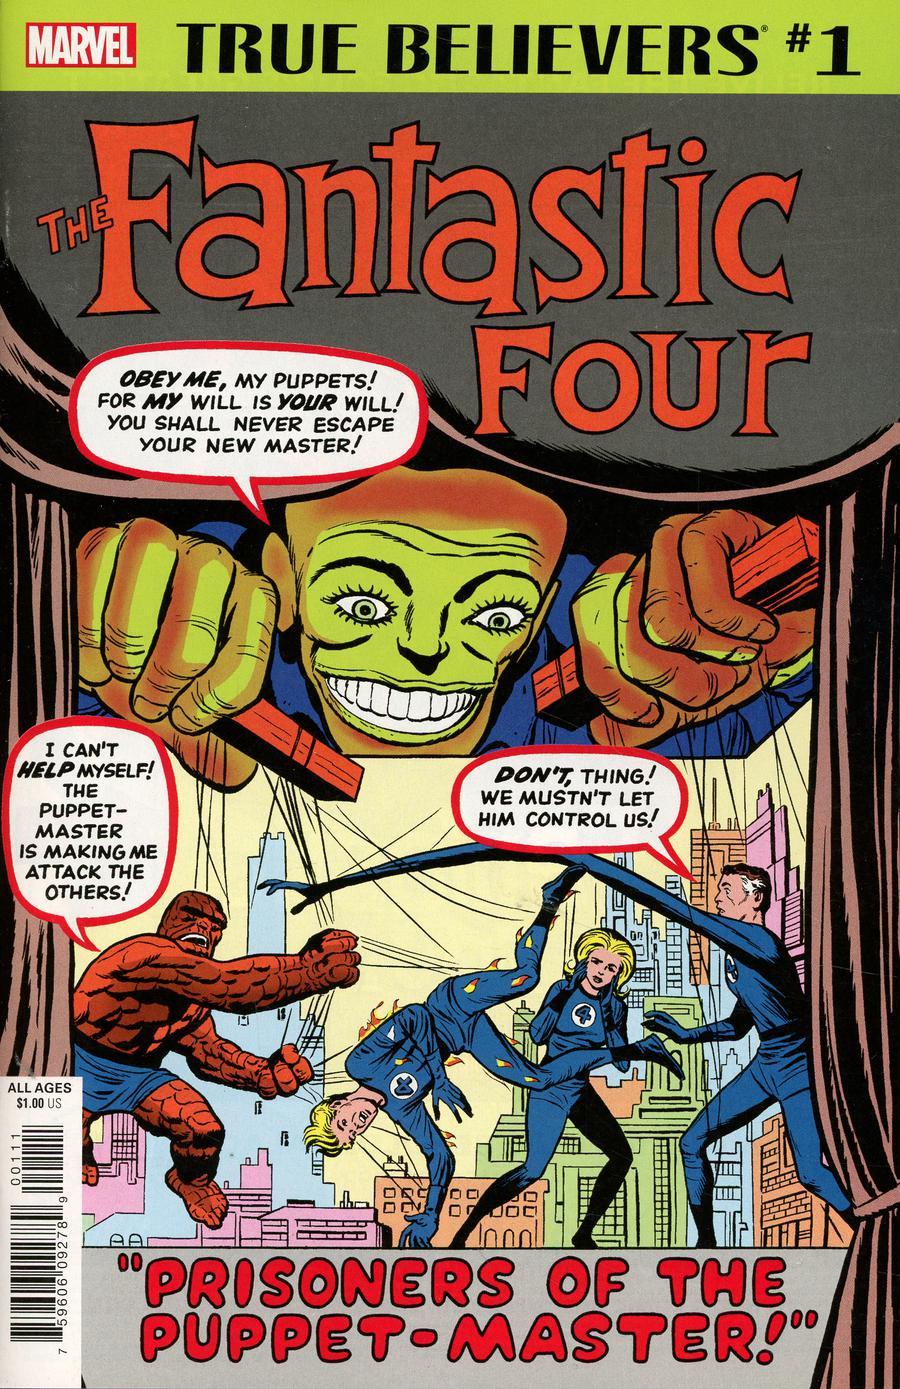 True Believers Fantastic Four Puppet Master Vol. 1 #1